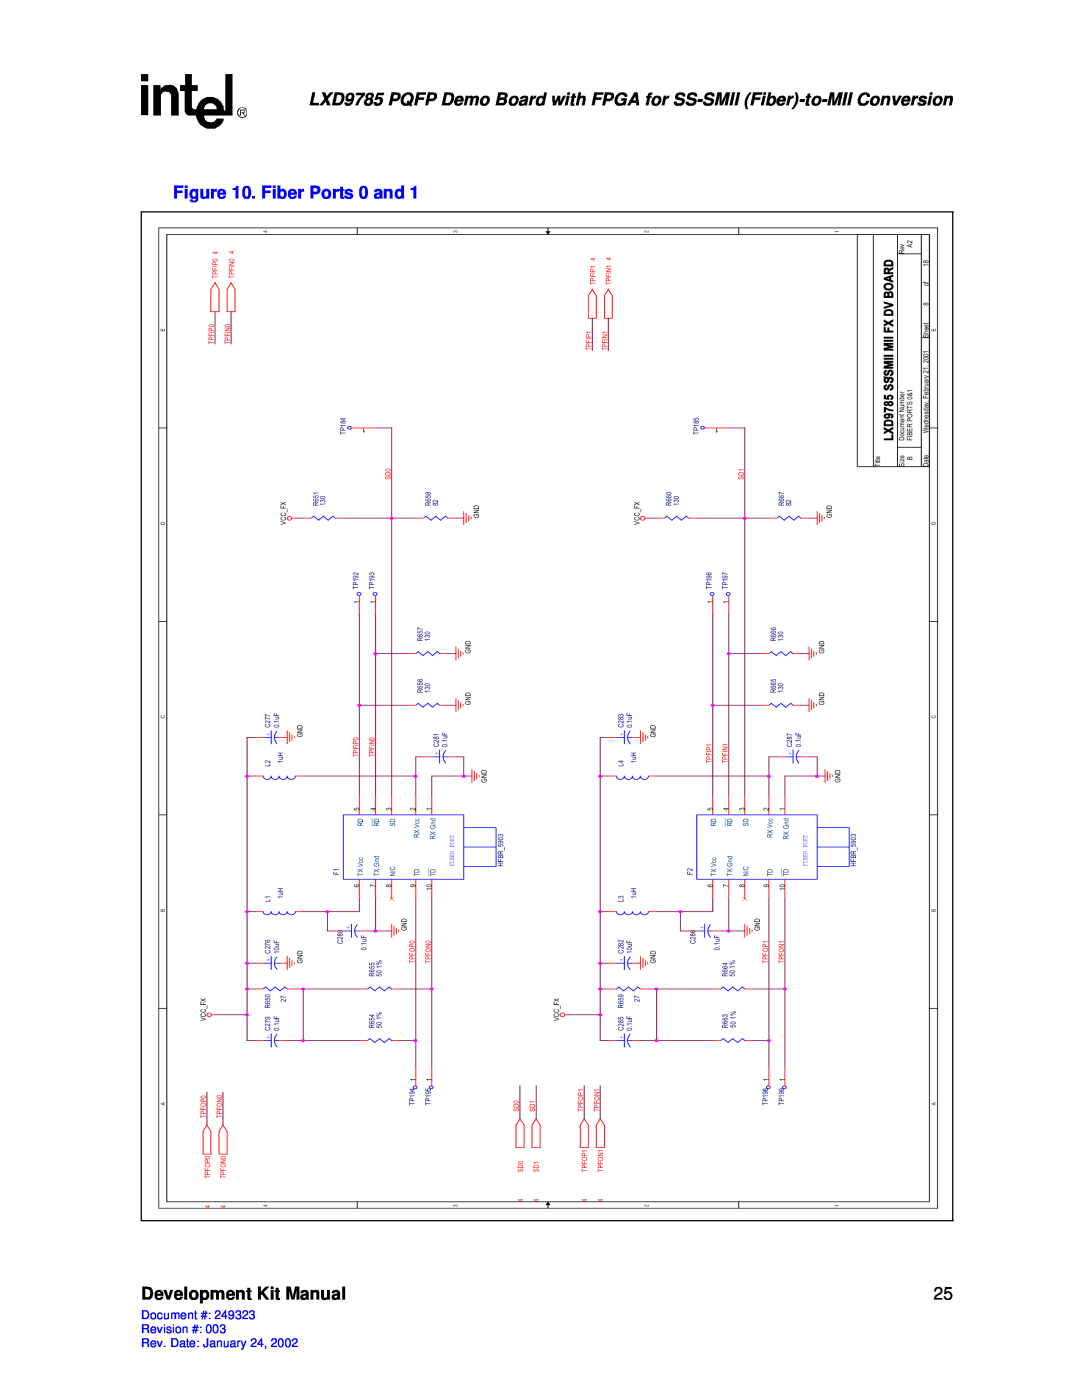 Intel Demo Board with FPGA for SS-SMII (Fiber)-to-MII Conversion Fiber Ports 0 and, LXD9785 PQFP, Development Kit Manual 